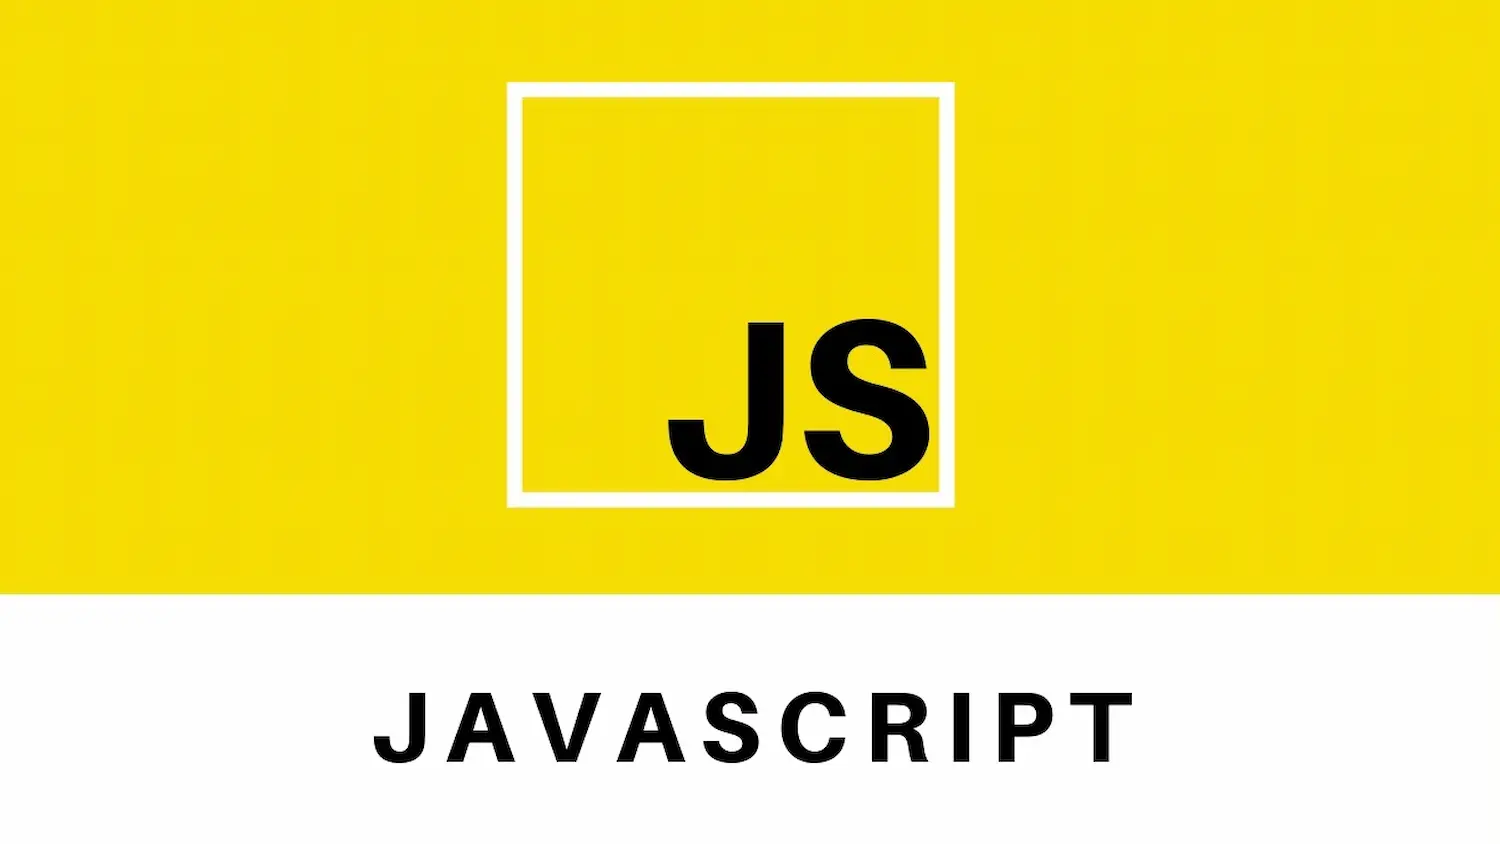 Hire Javascript Developer